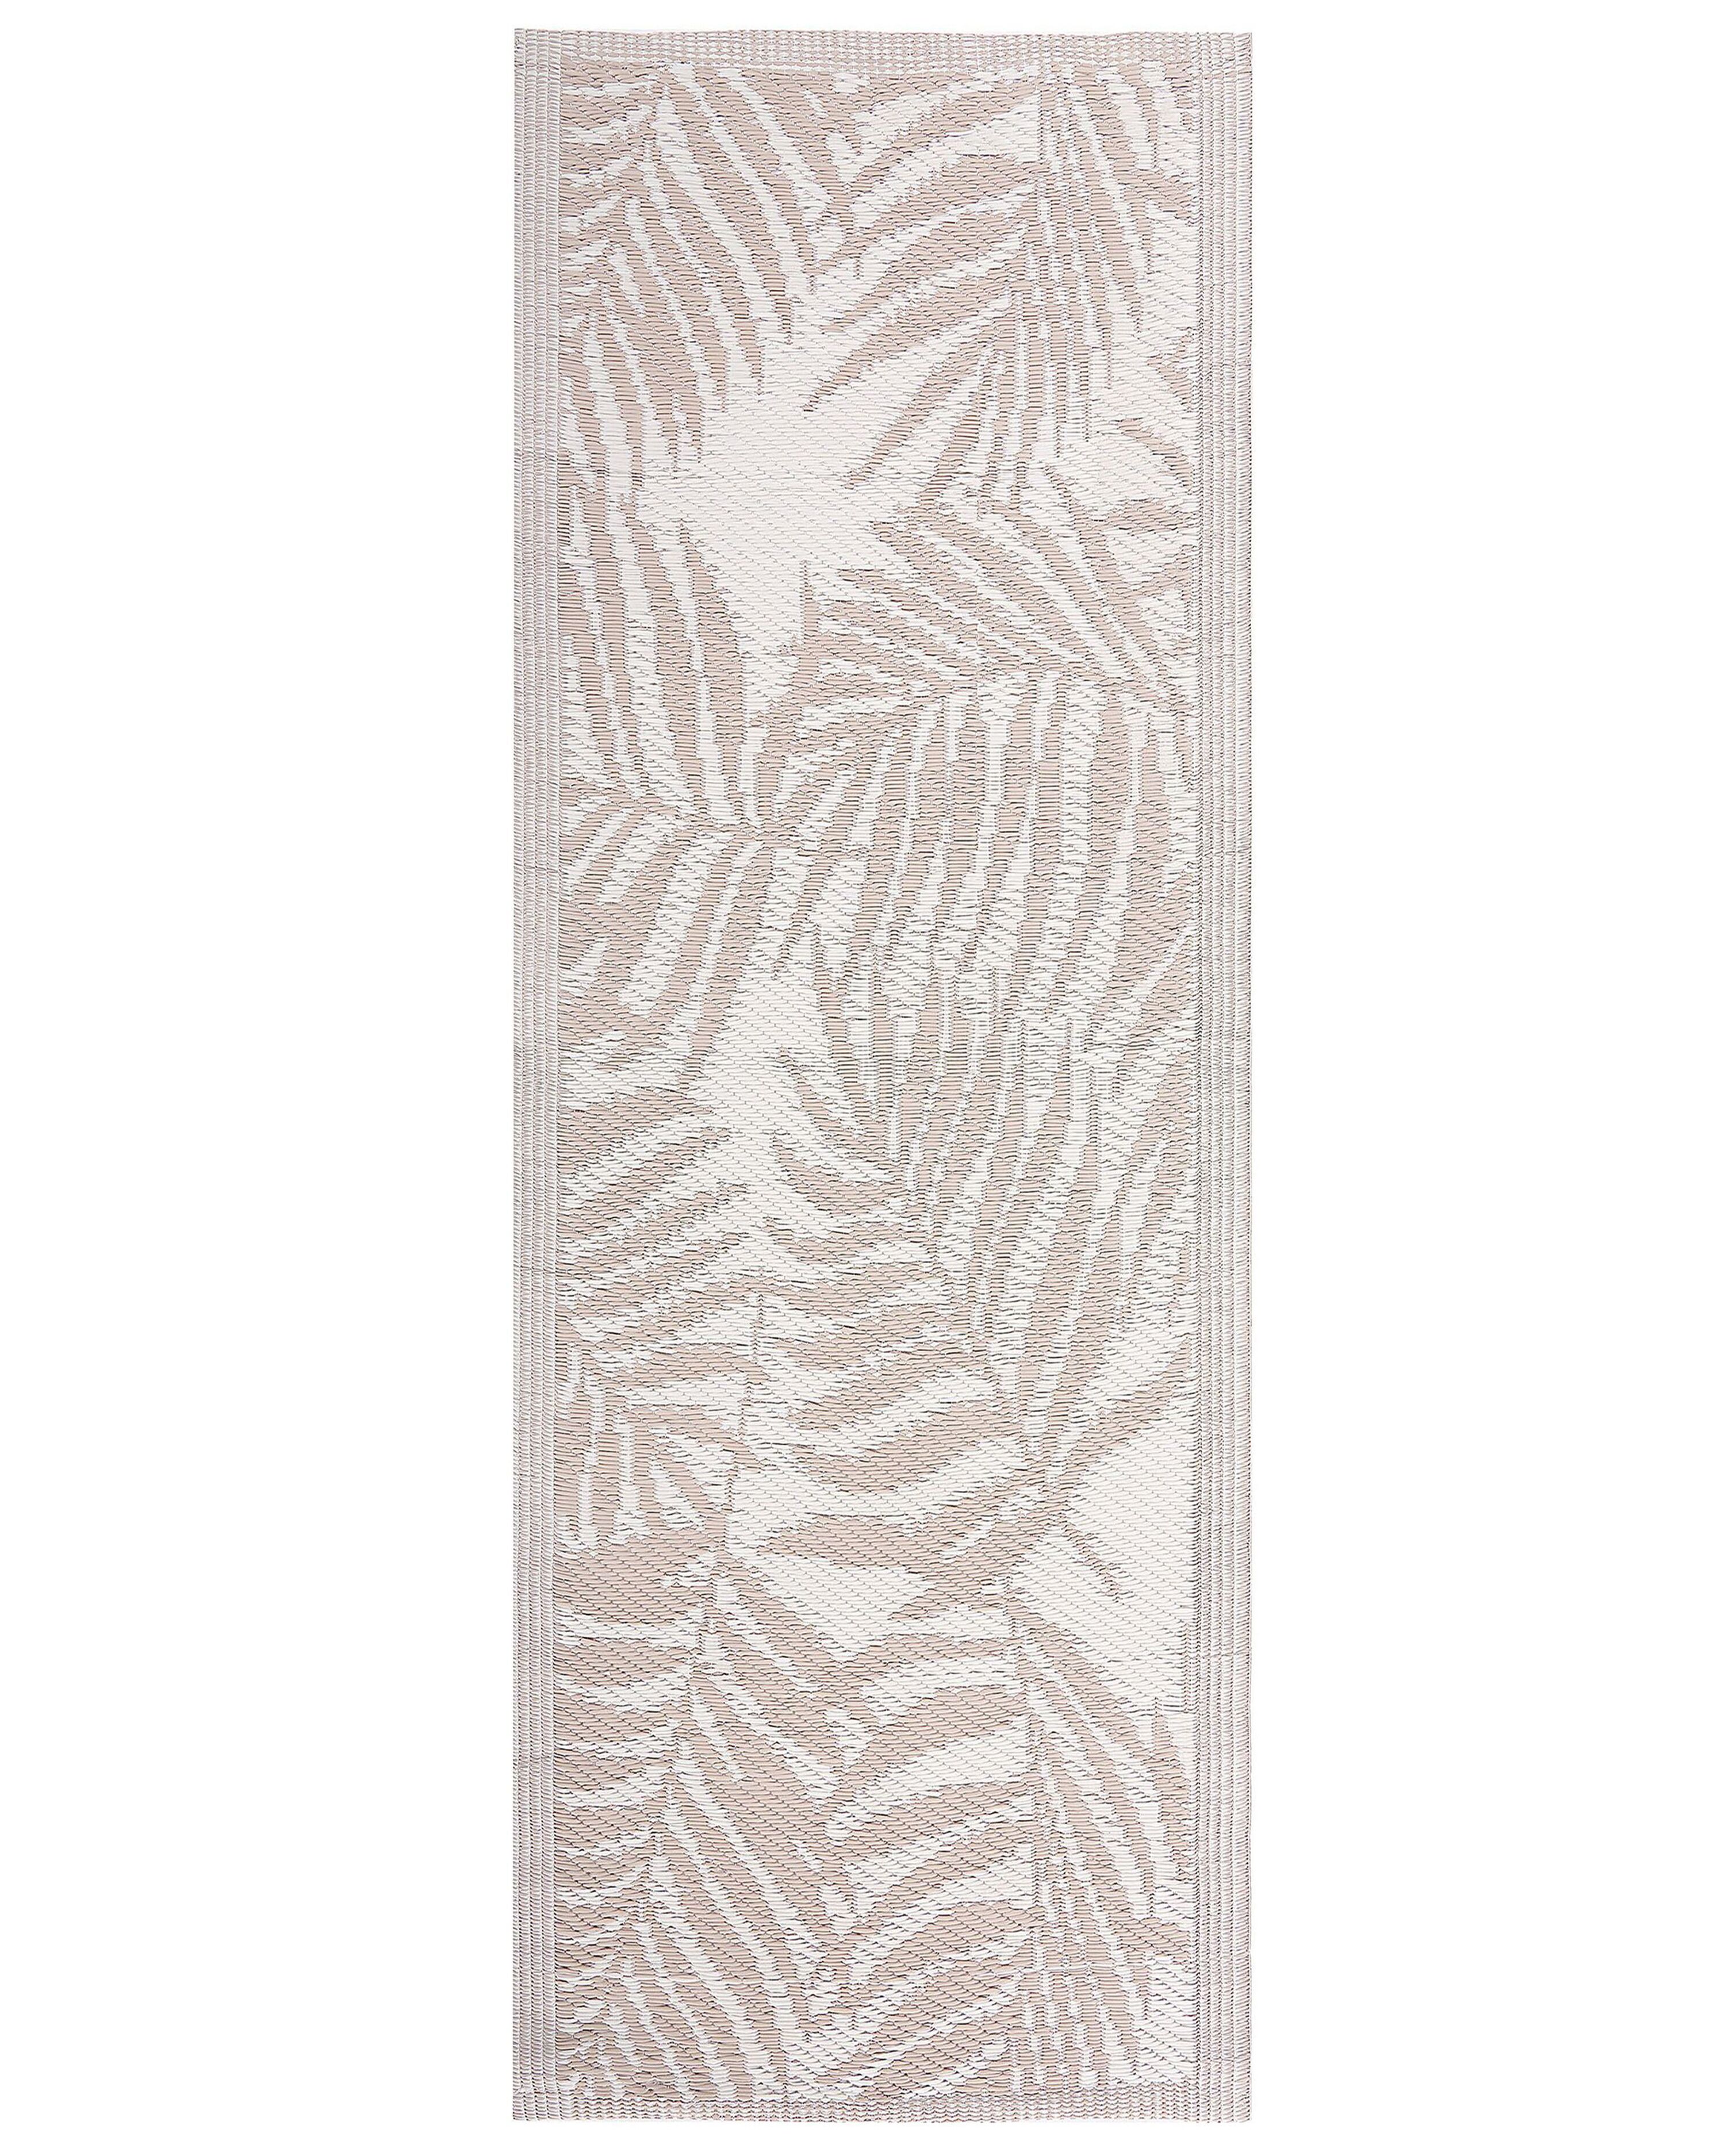 Outdoor Teppich beige 60 x 105 cm Palmenmuster Kurzflor KOTA